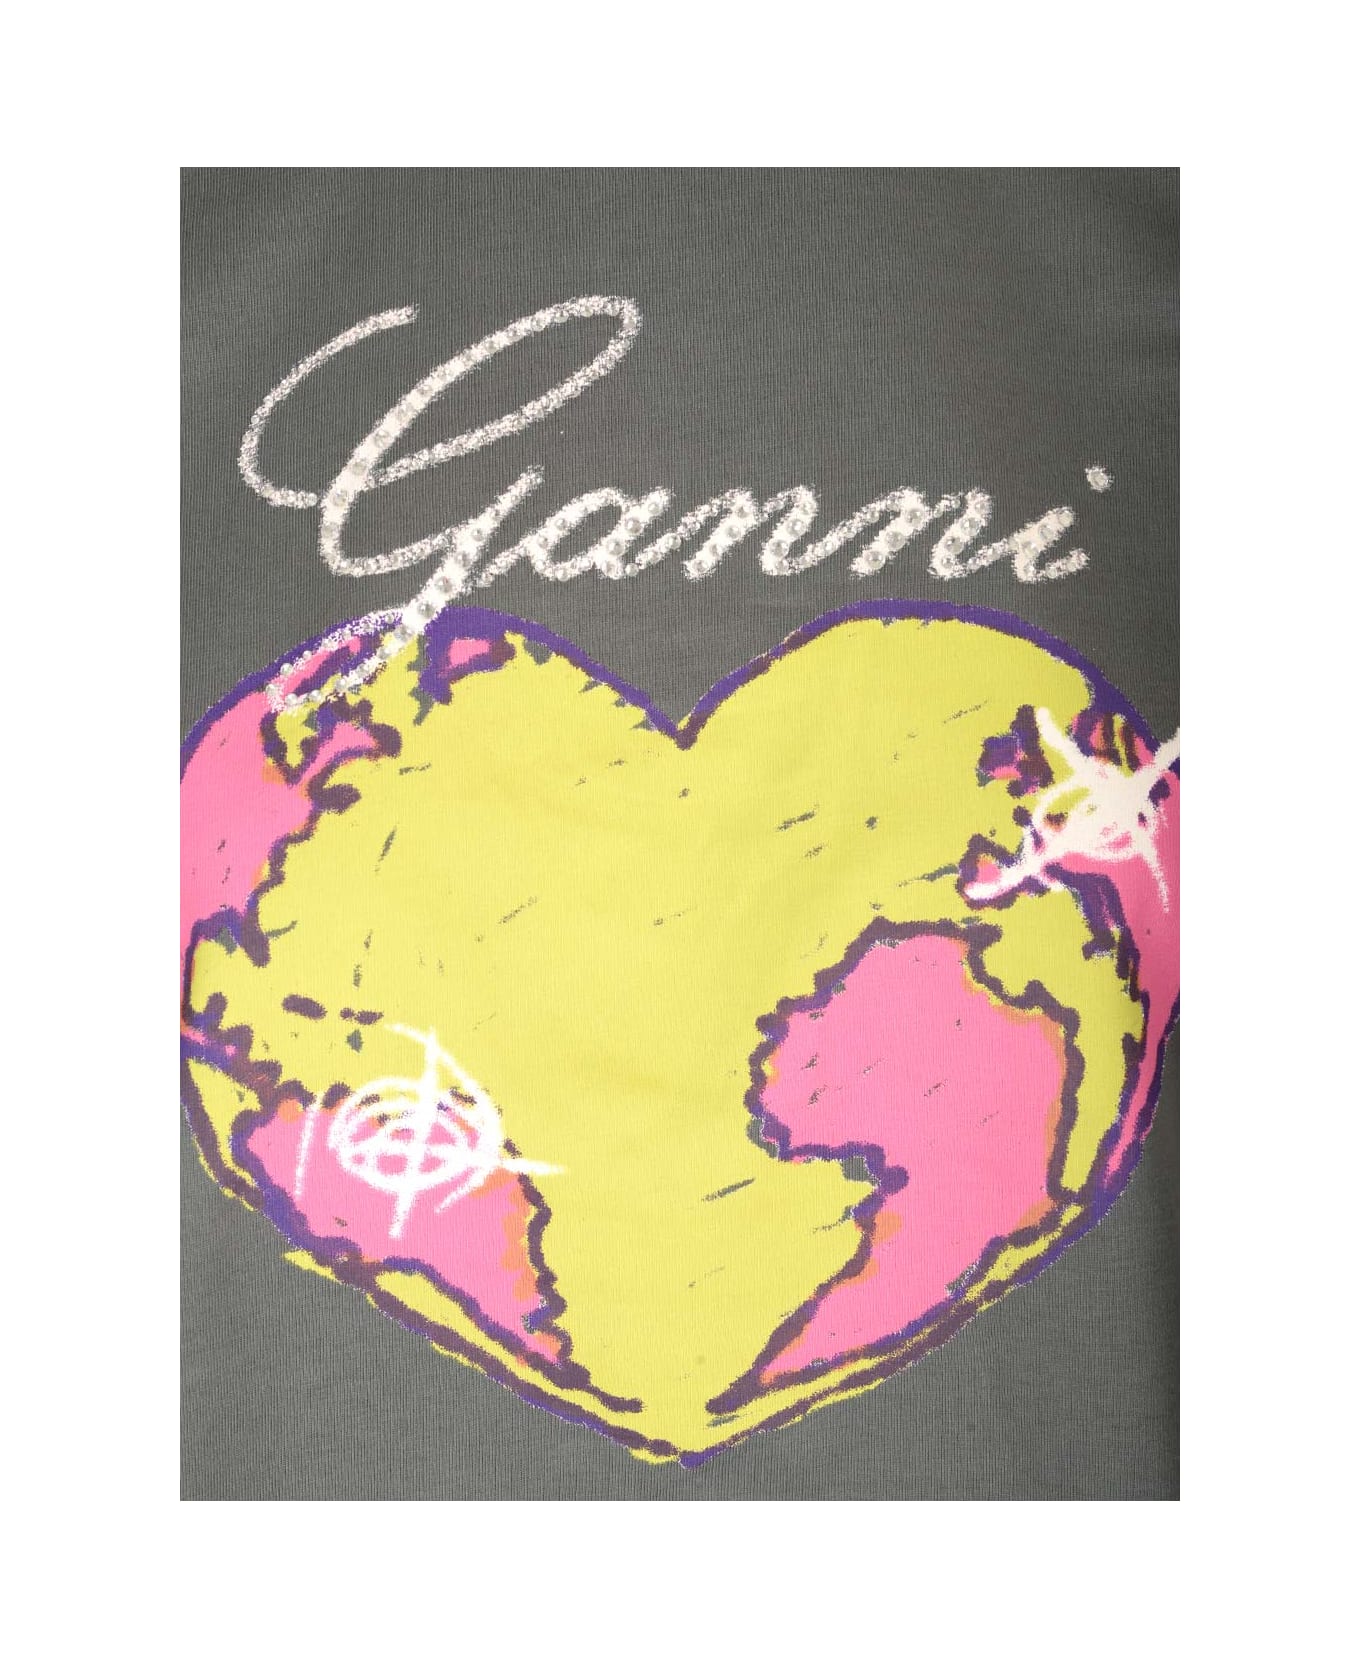 Ganni Heart T-shirt - Grey Tシャツ